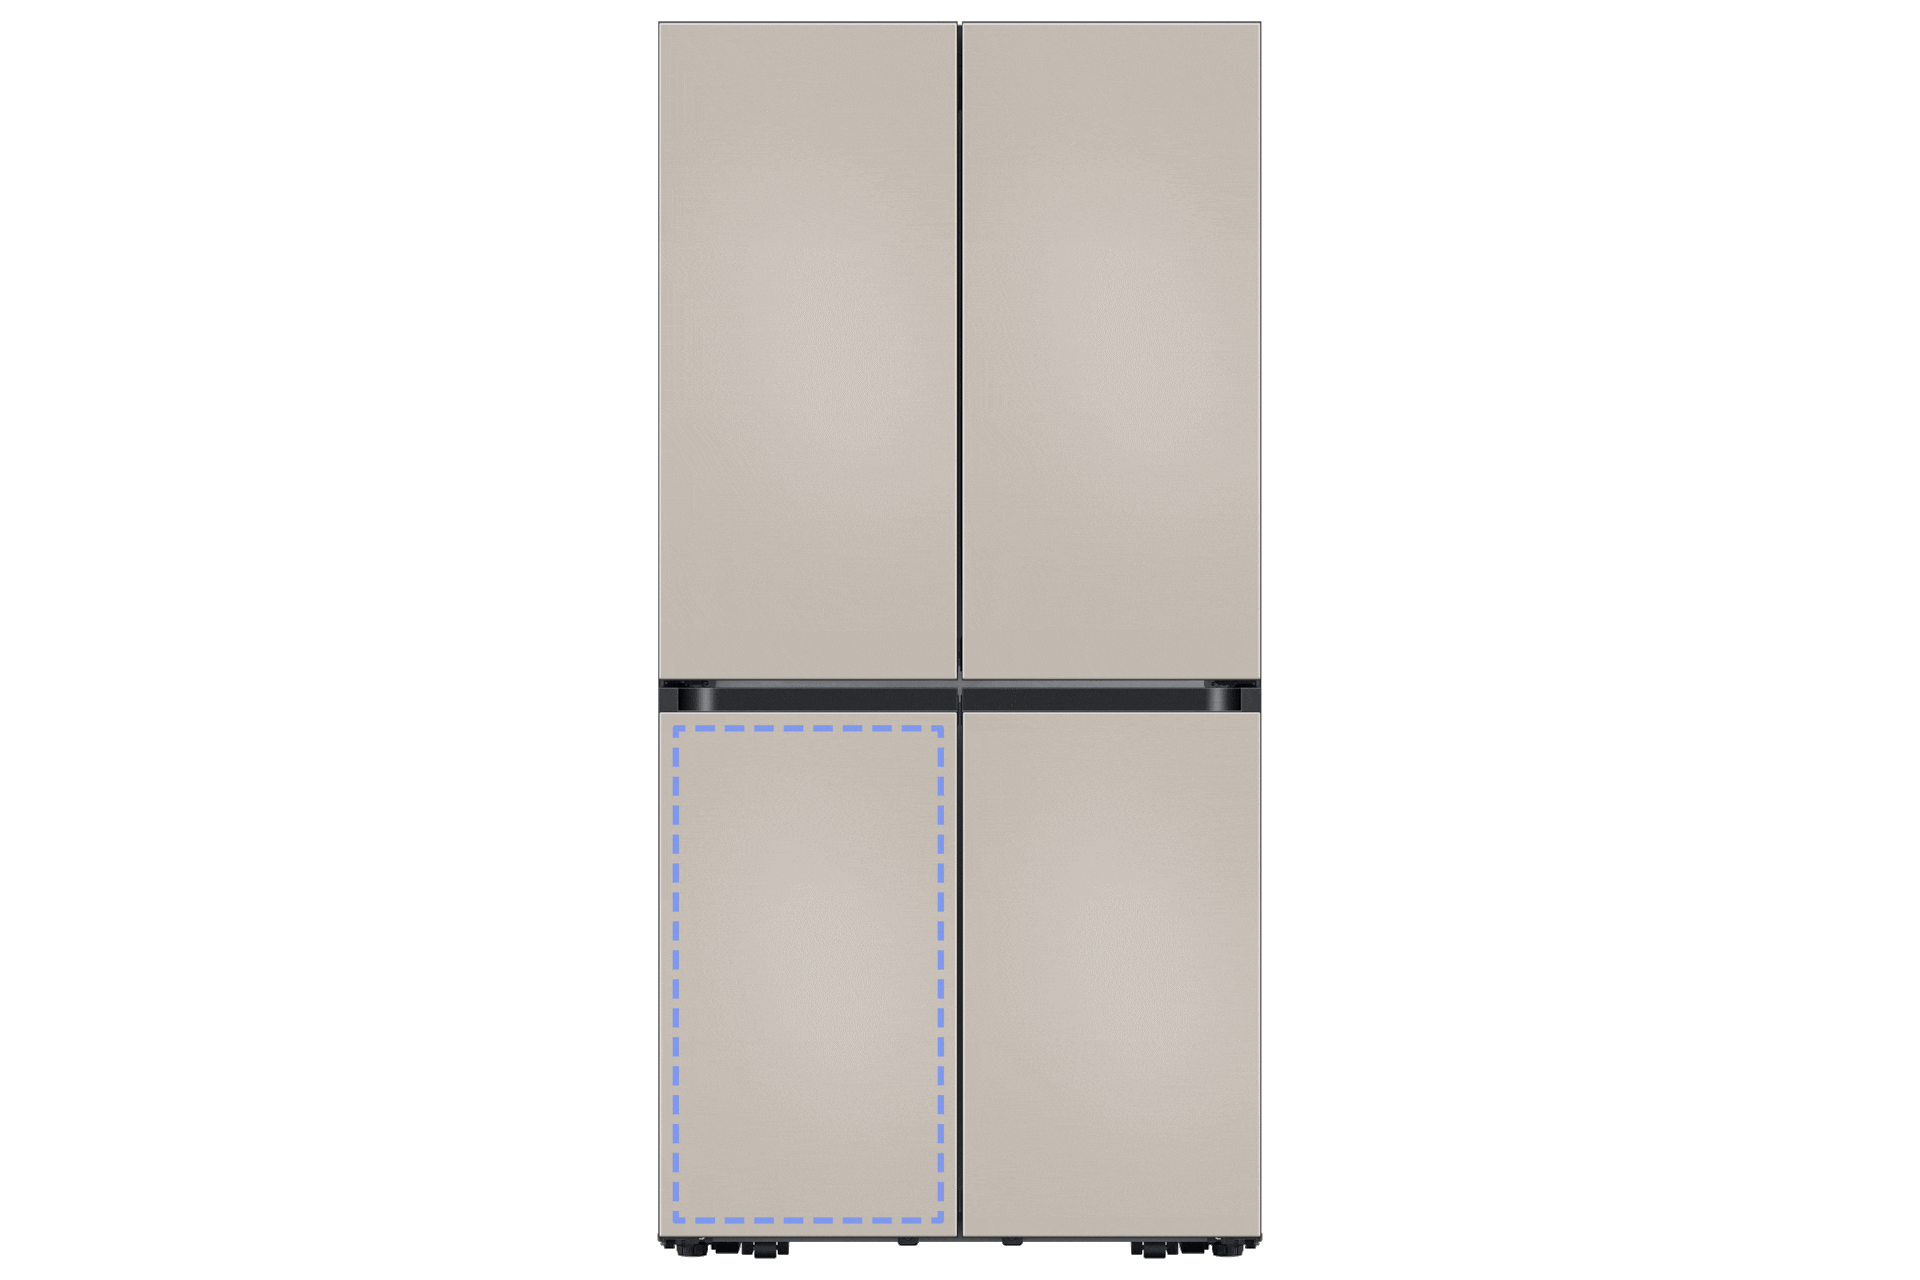 BESPOKE 냉장고 4도어 키친핏 패널 (하칸) 에센셜 베이지 상품이 냉장고에 장착된 이미지 